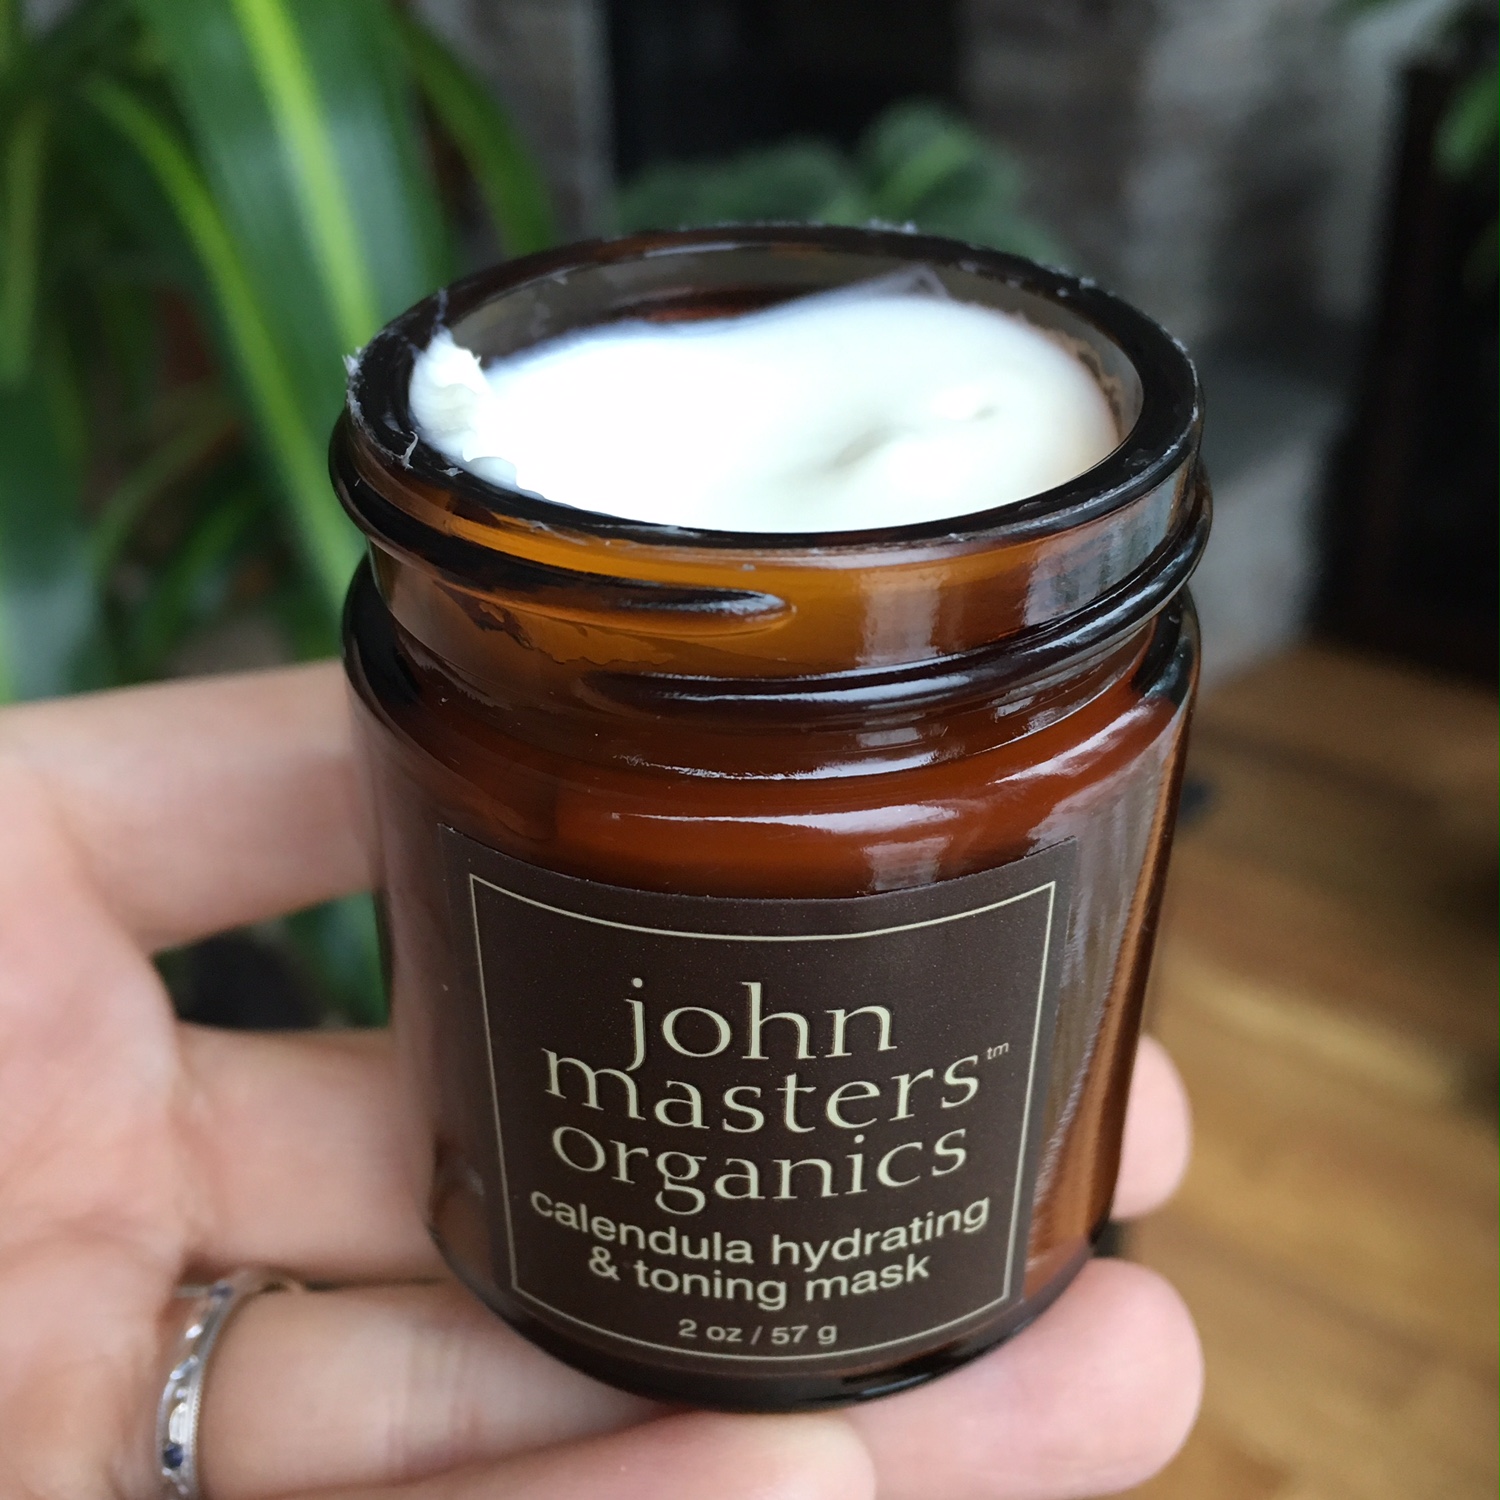 John Masters Organics Calendula Hydrating and Toning Mask